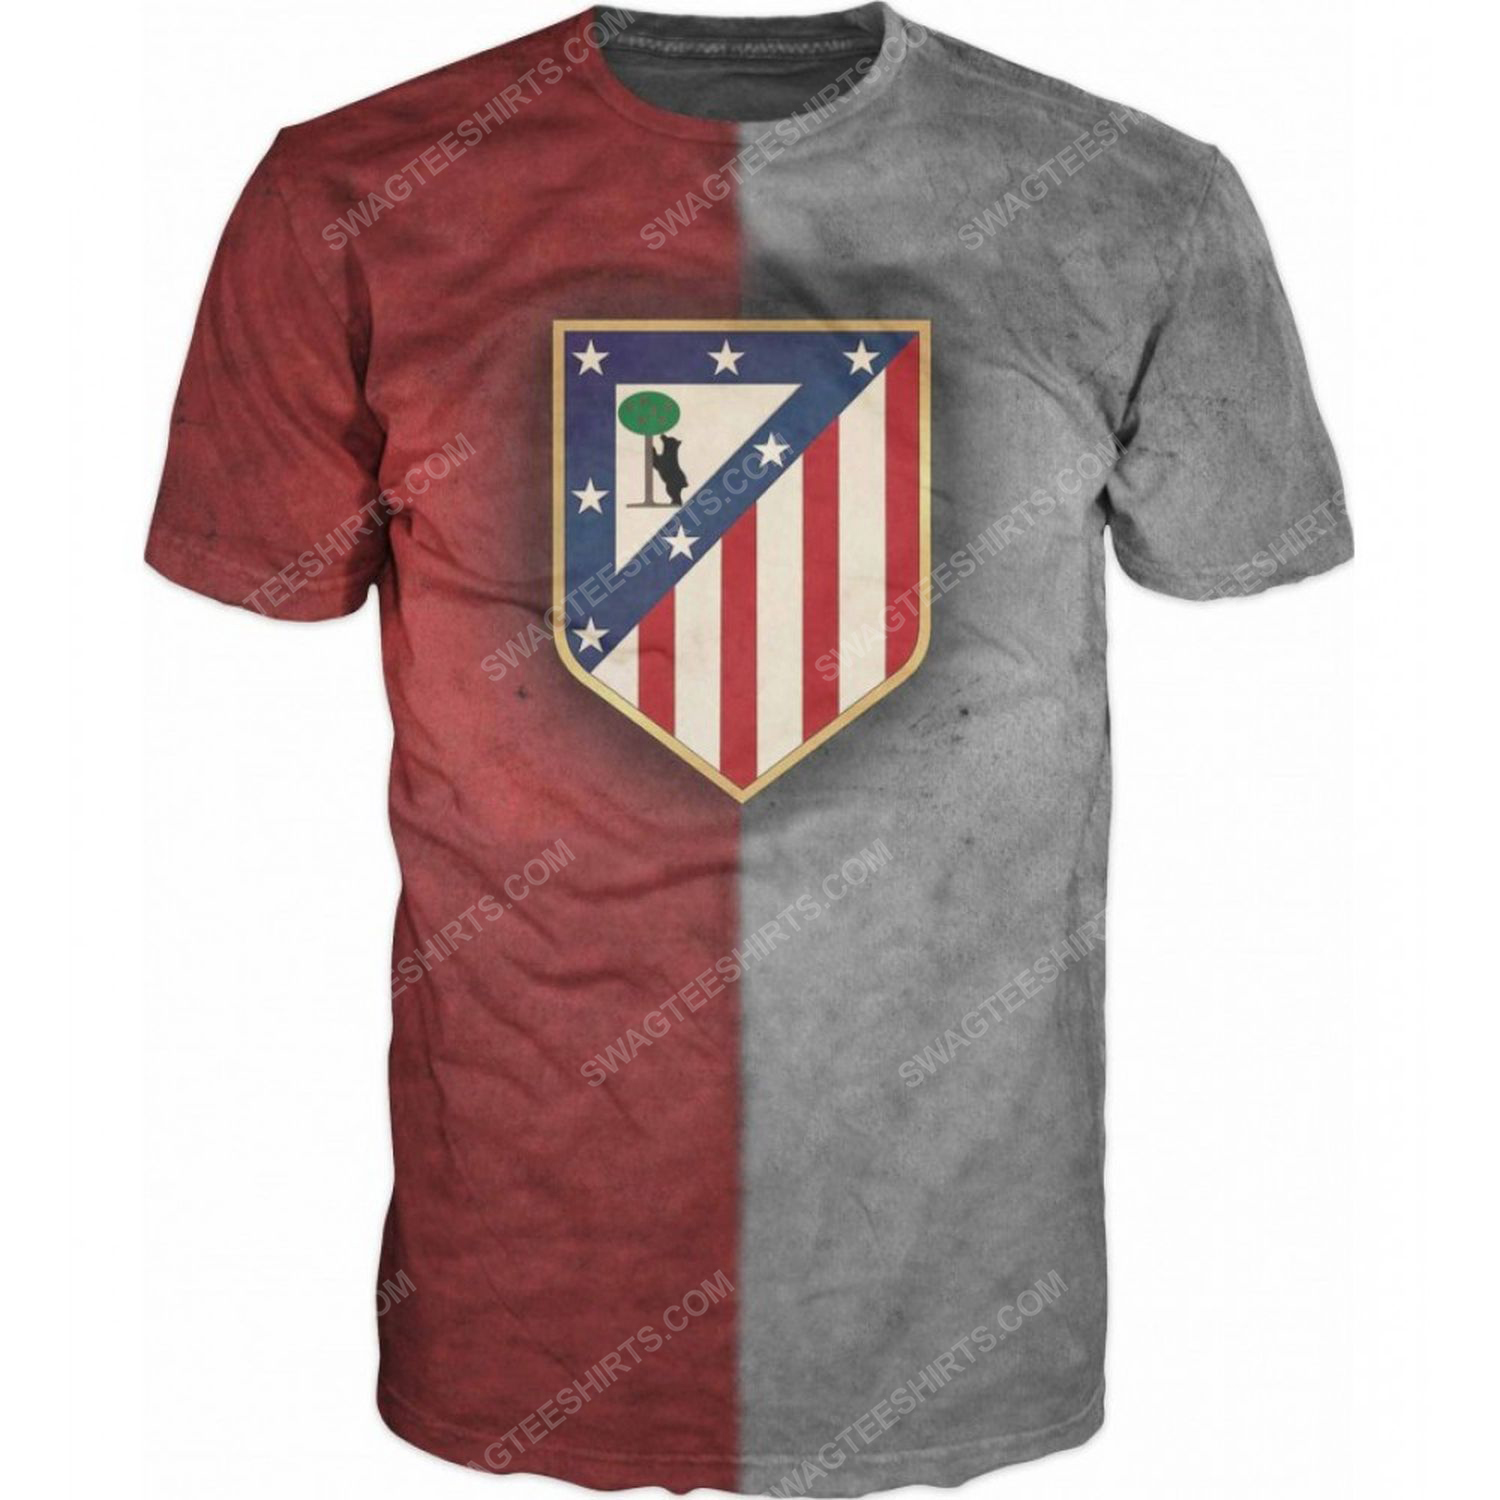 [special edition] Atletico madrid football club full printing shirt – Maria